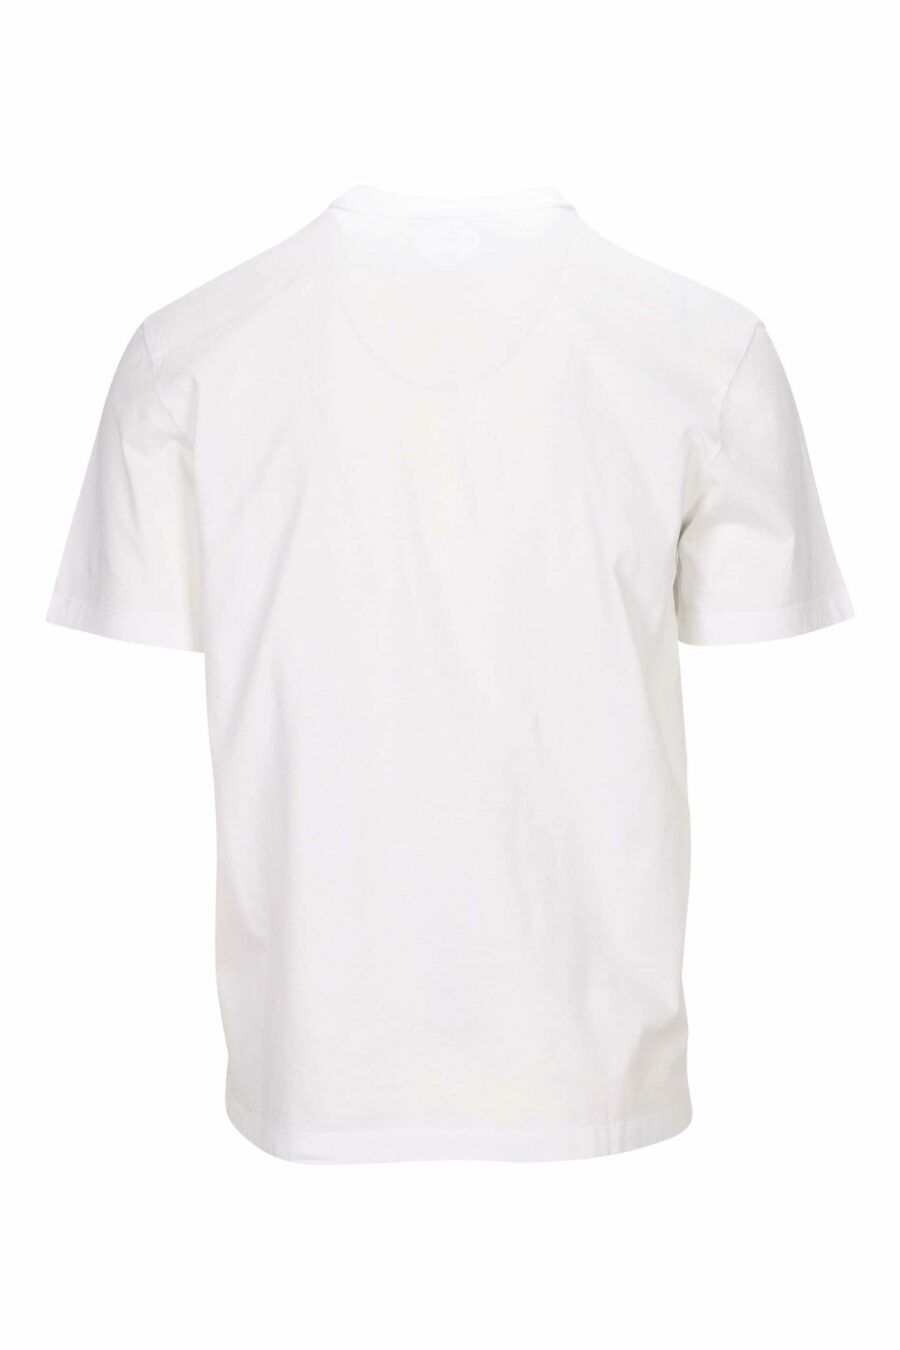 T-shirt blanc avec monochrome embossé maxilogo leaf - 8054148265830 1 scaled